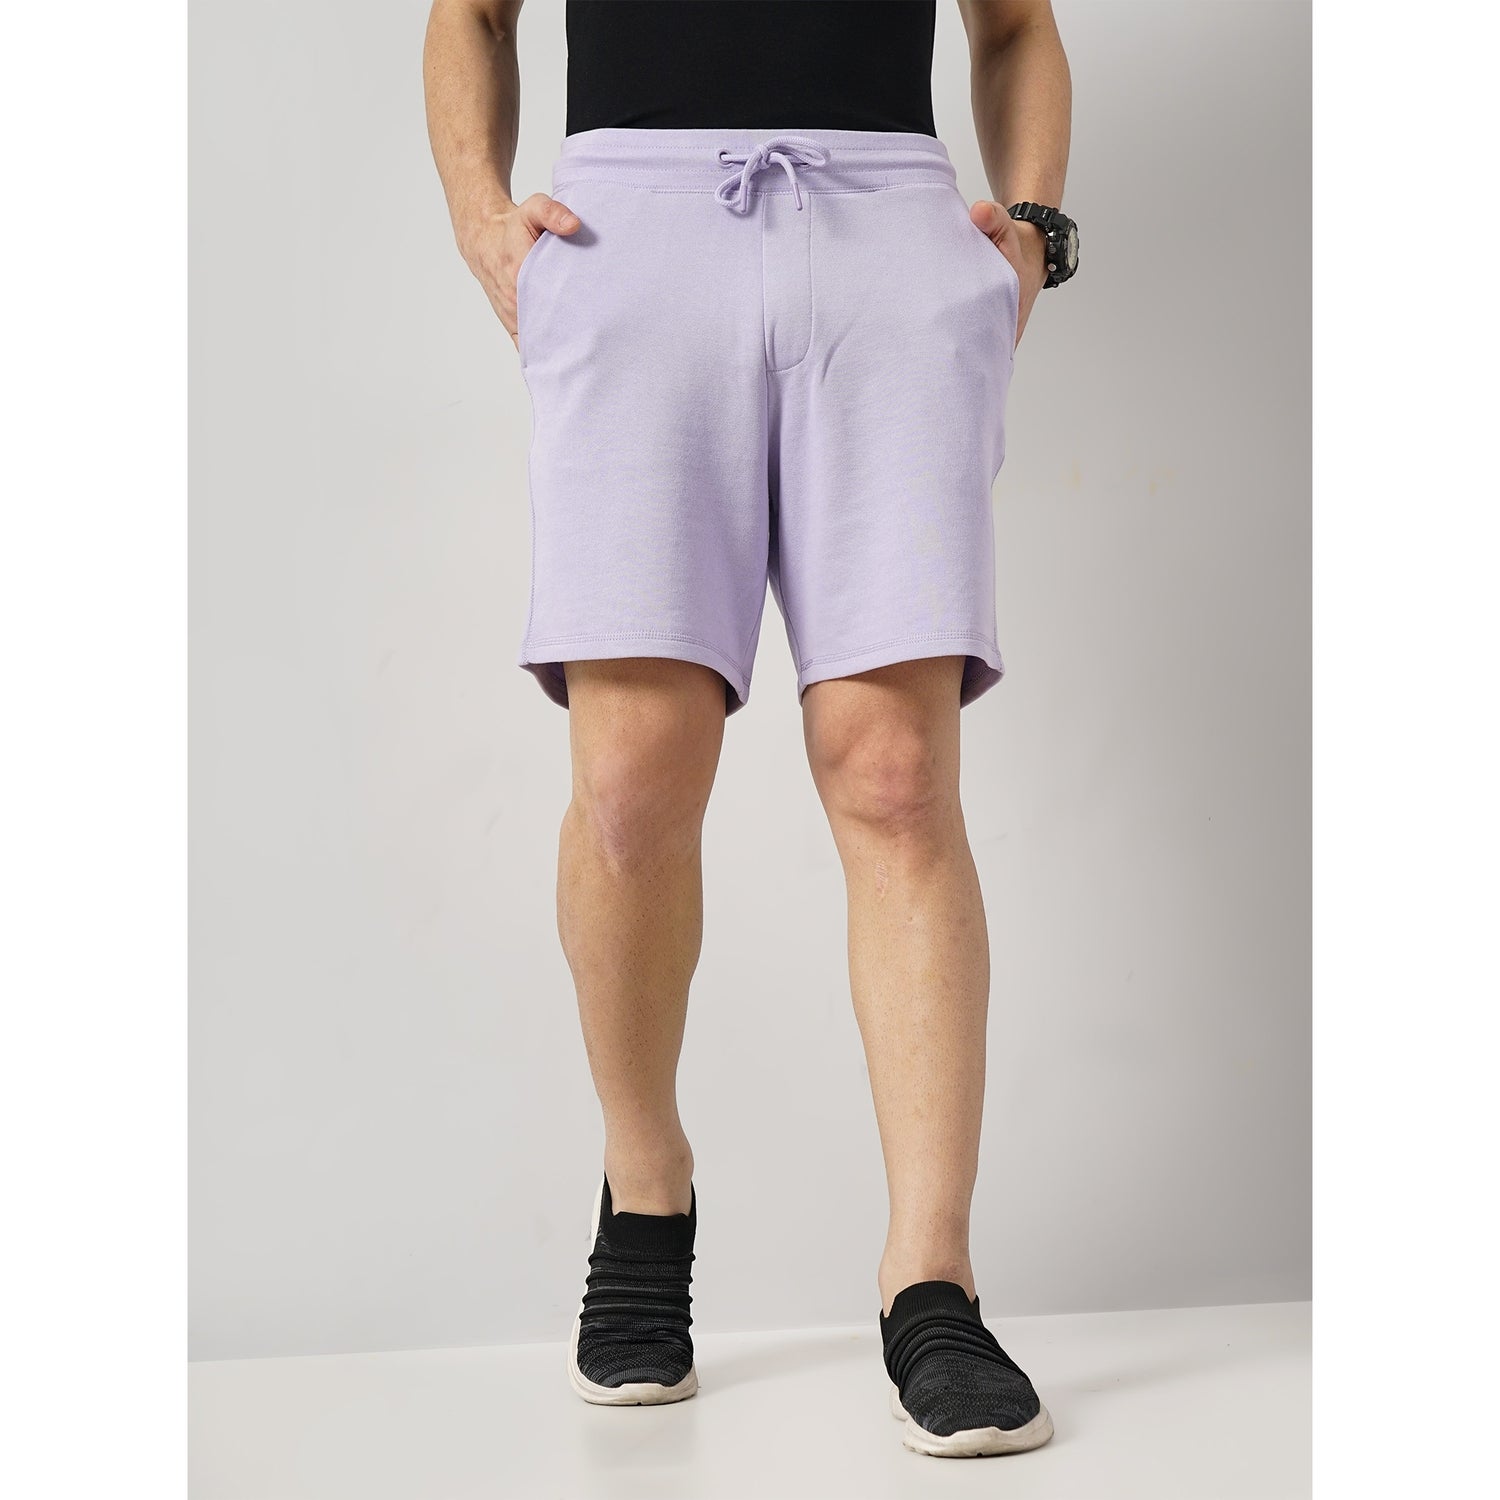 Solid Lavender Cotton Shorts (TOSHORT)